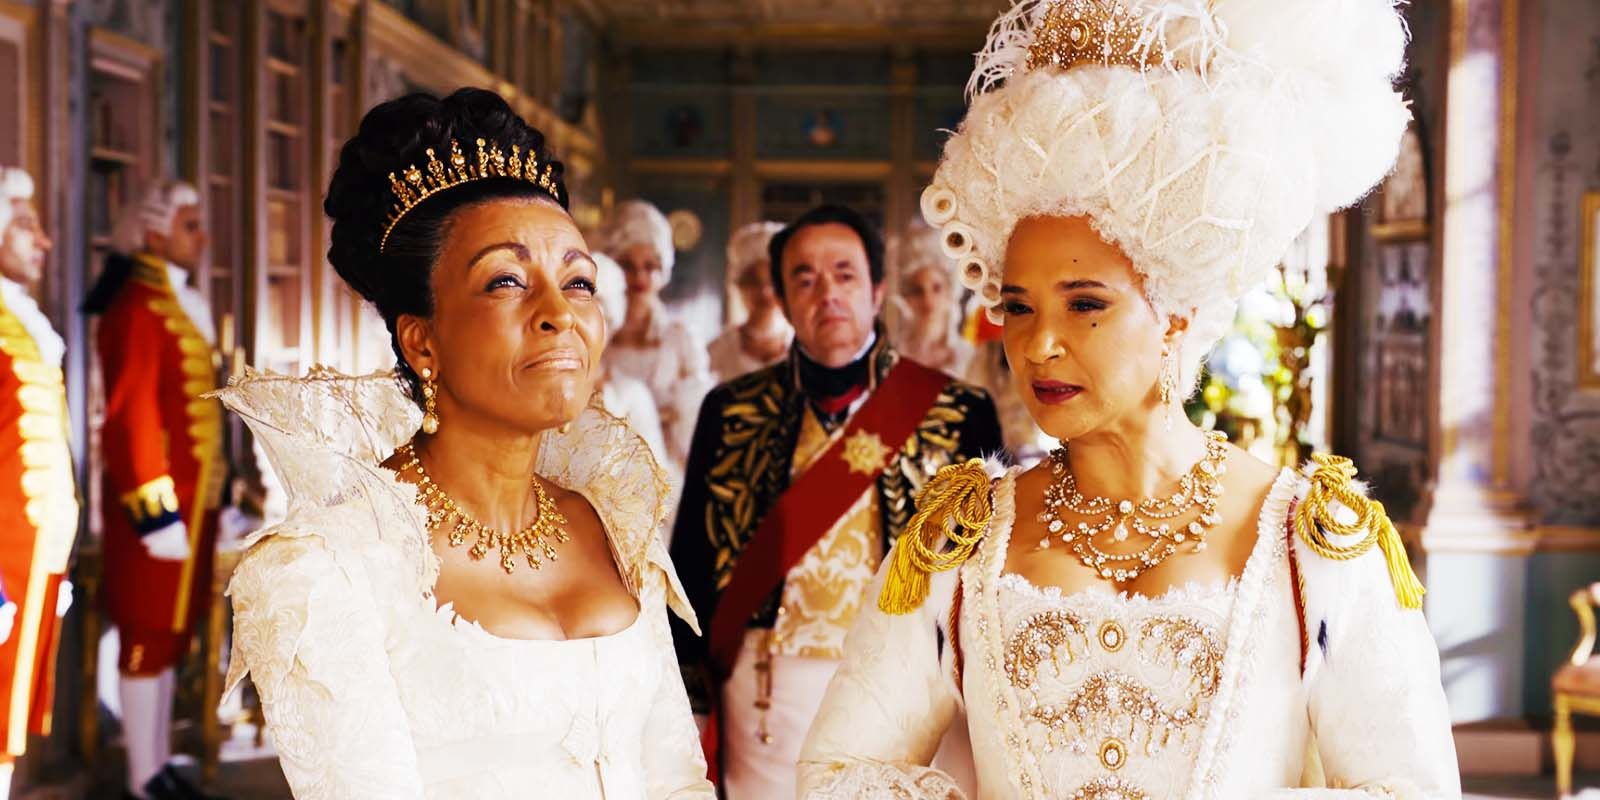 Adjoa Andoh as Lady Danbury and Golda Rosheuvel as Queen Charlotte in Bridgerton season 2 episode 1